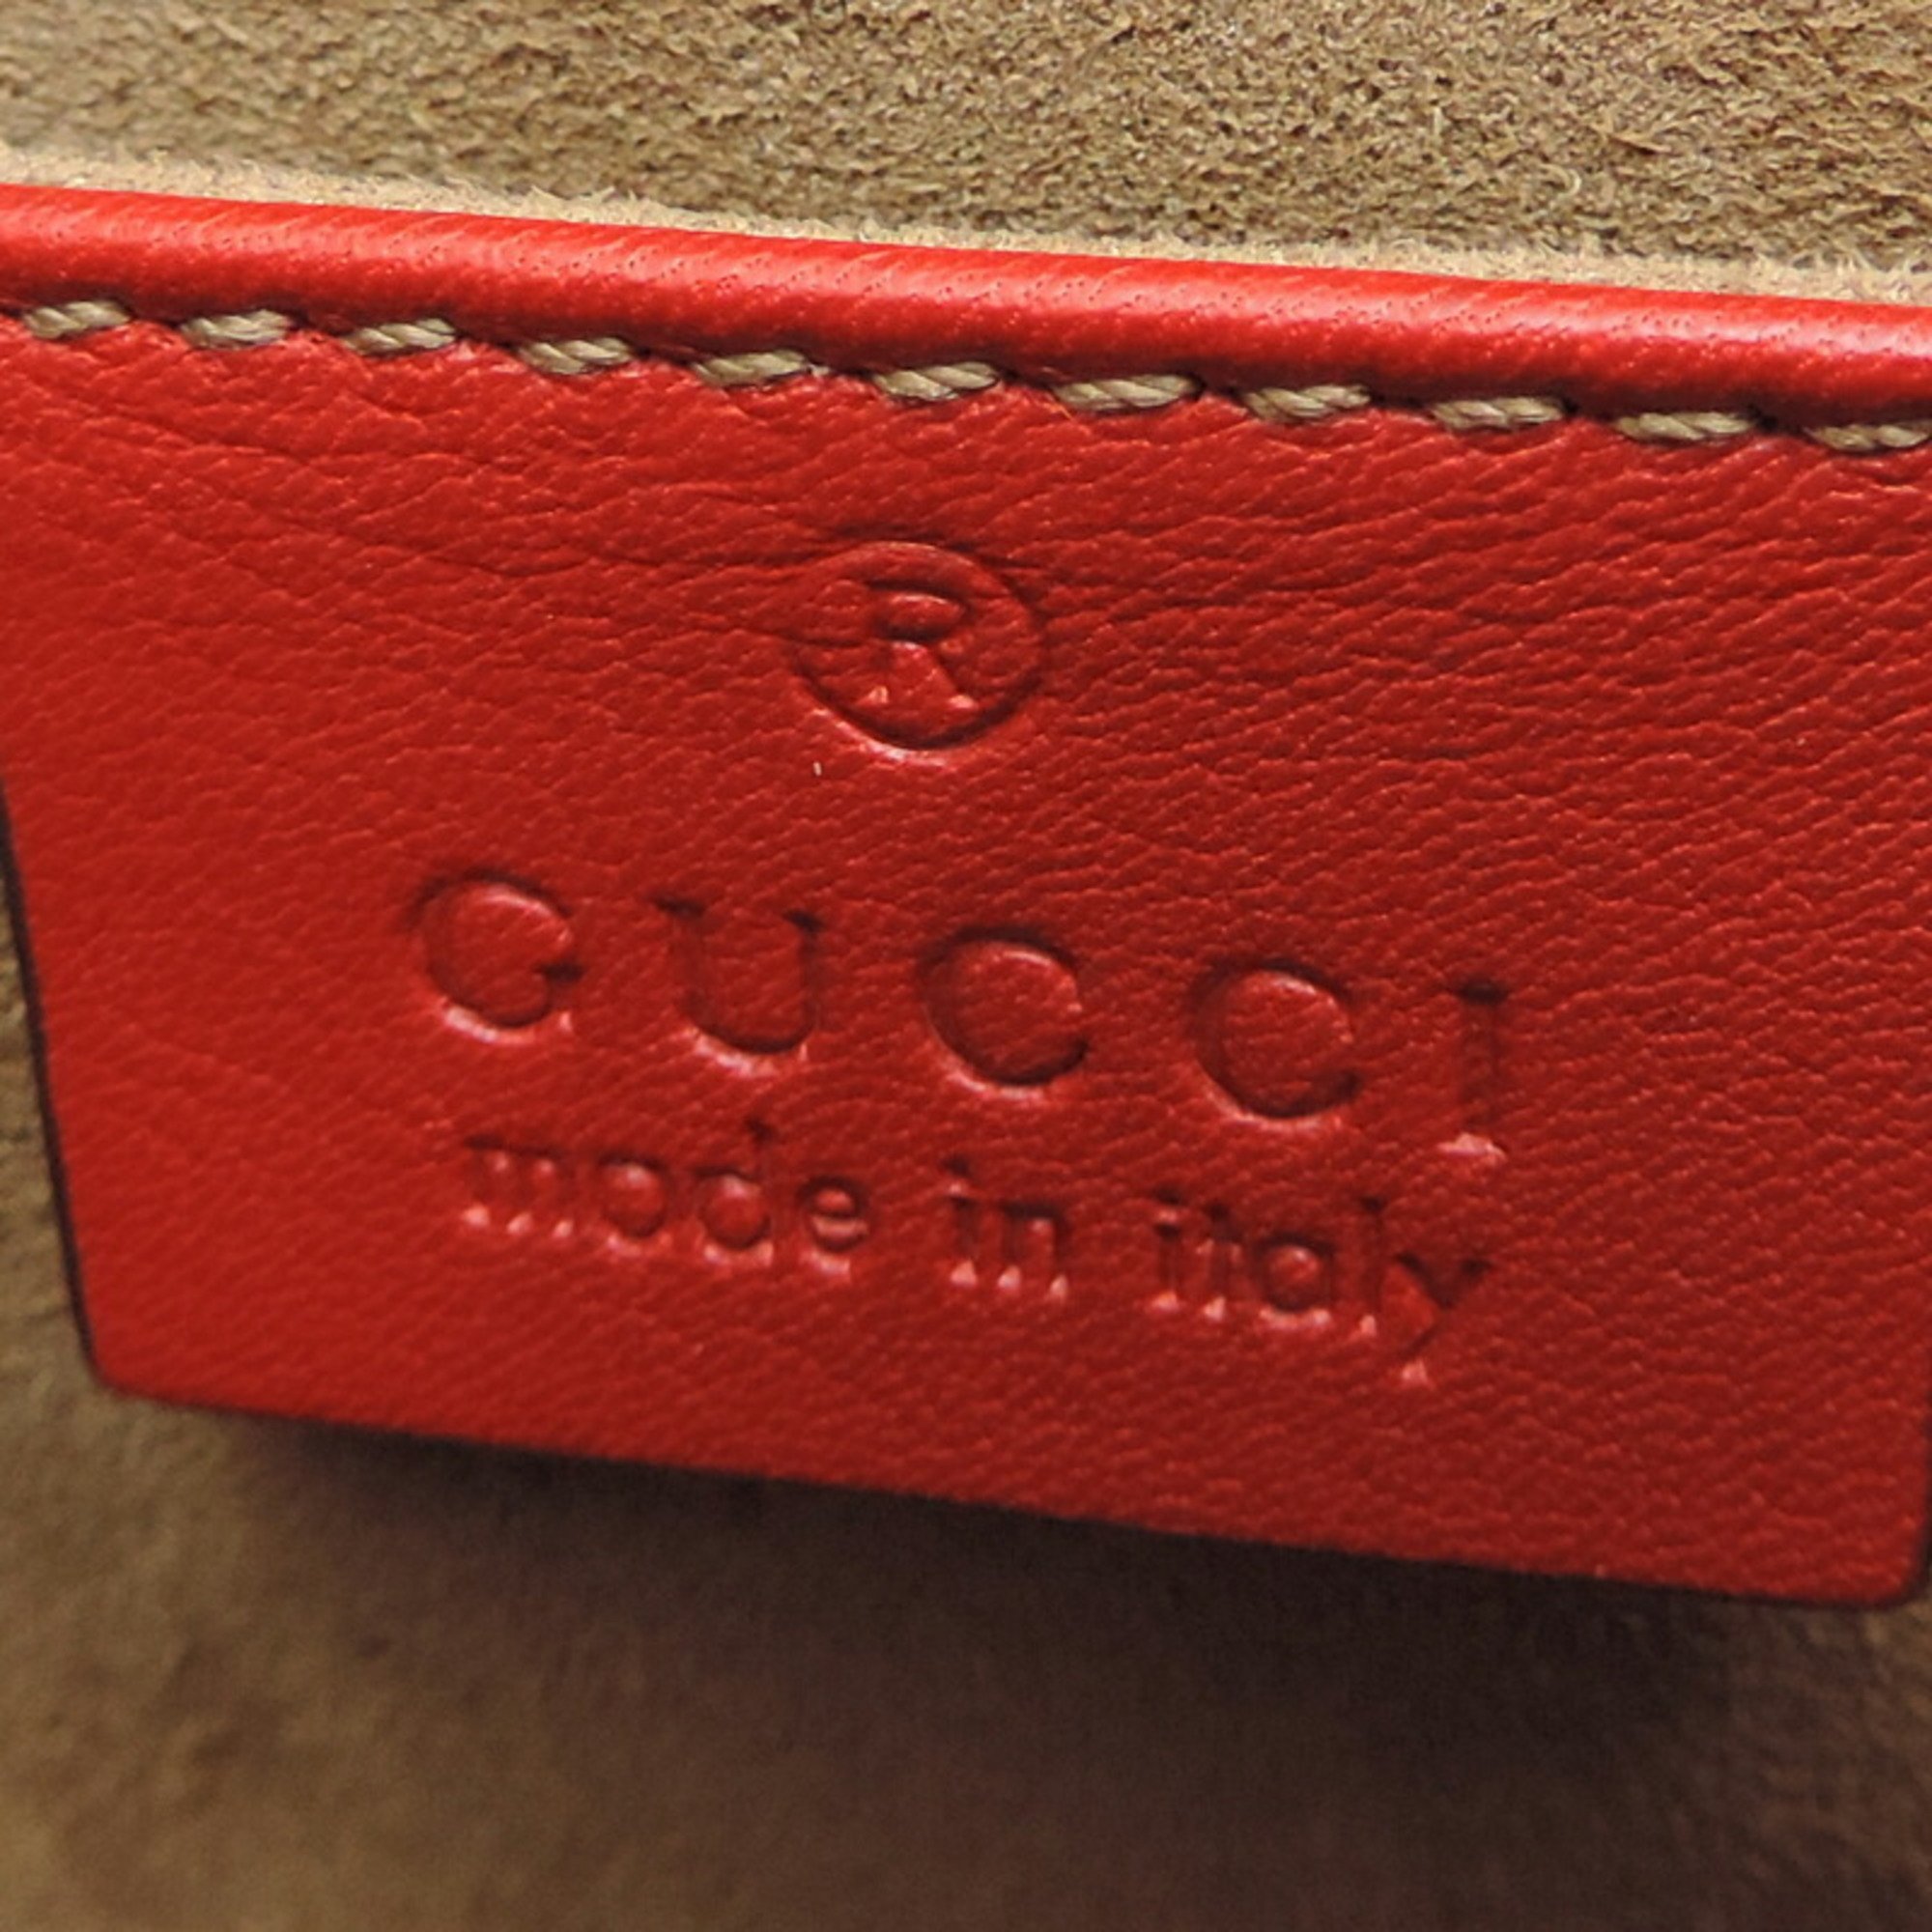 Gucci Padlock Chain Small Women's Shoulder Bag 409437 GG Supreme Red